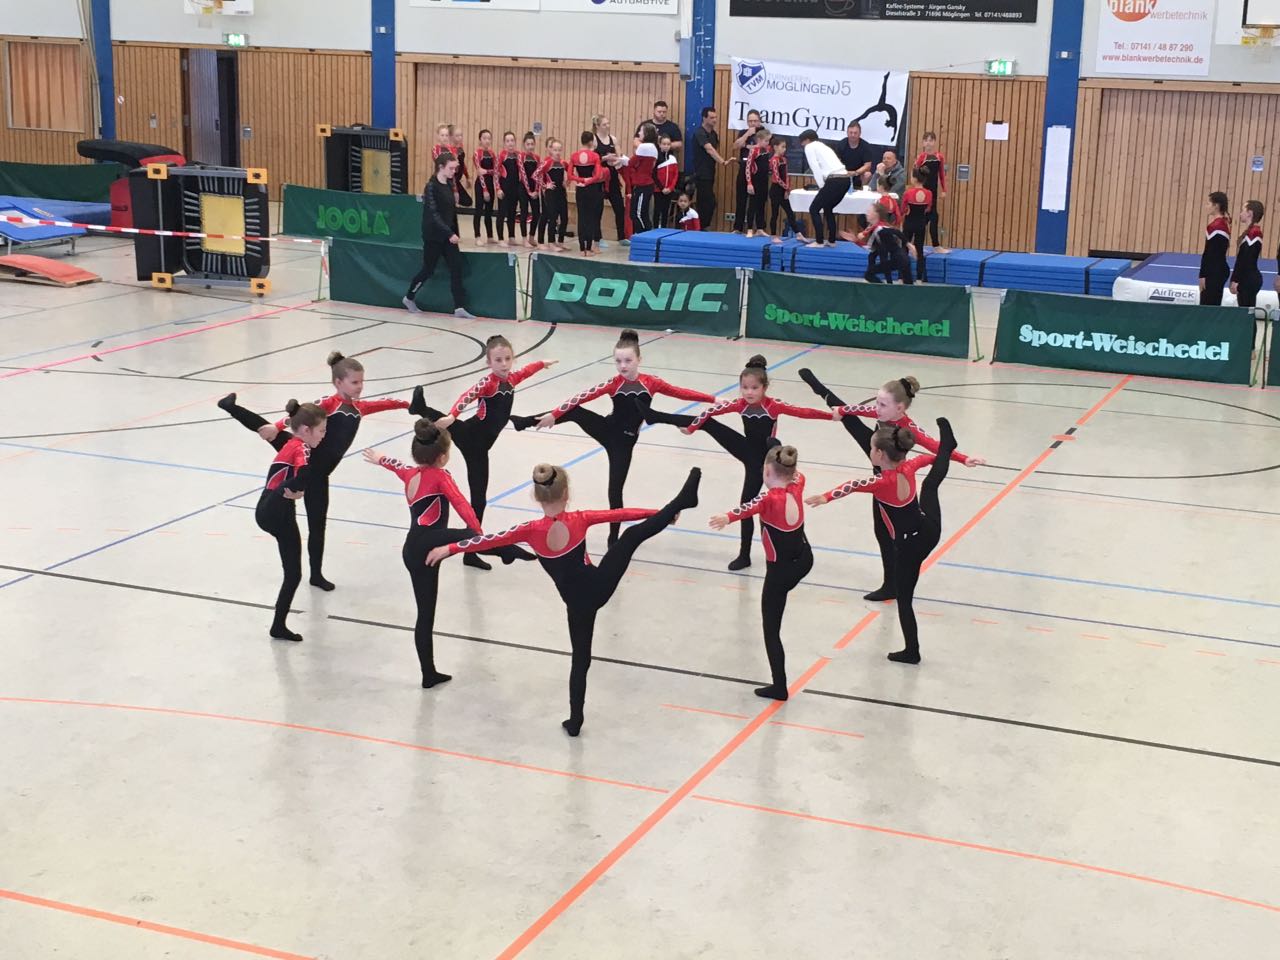 20180428 TeamGym in Moglingen IMG 20180428 WA0033